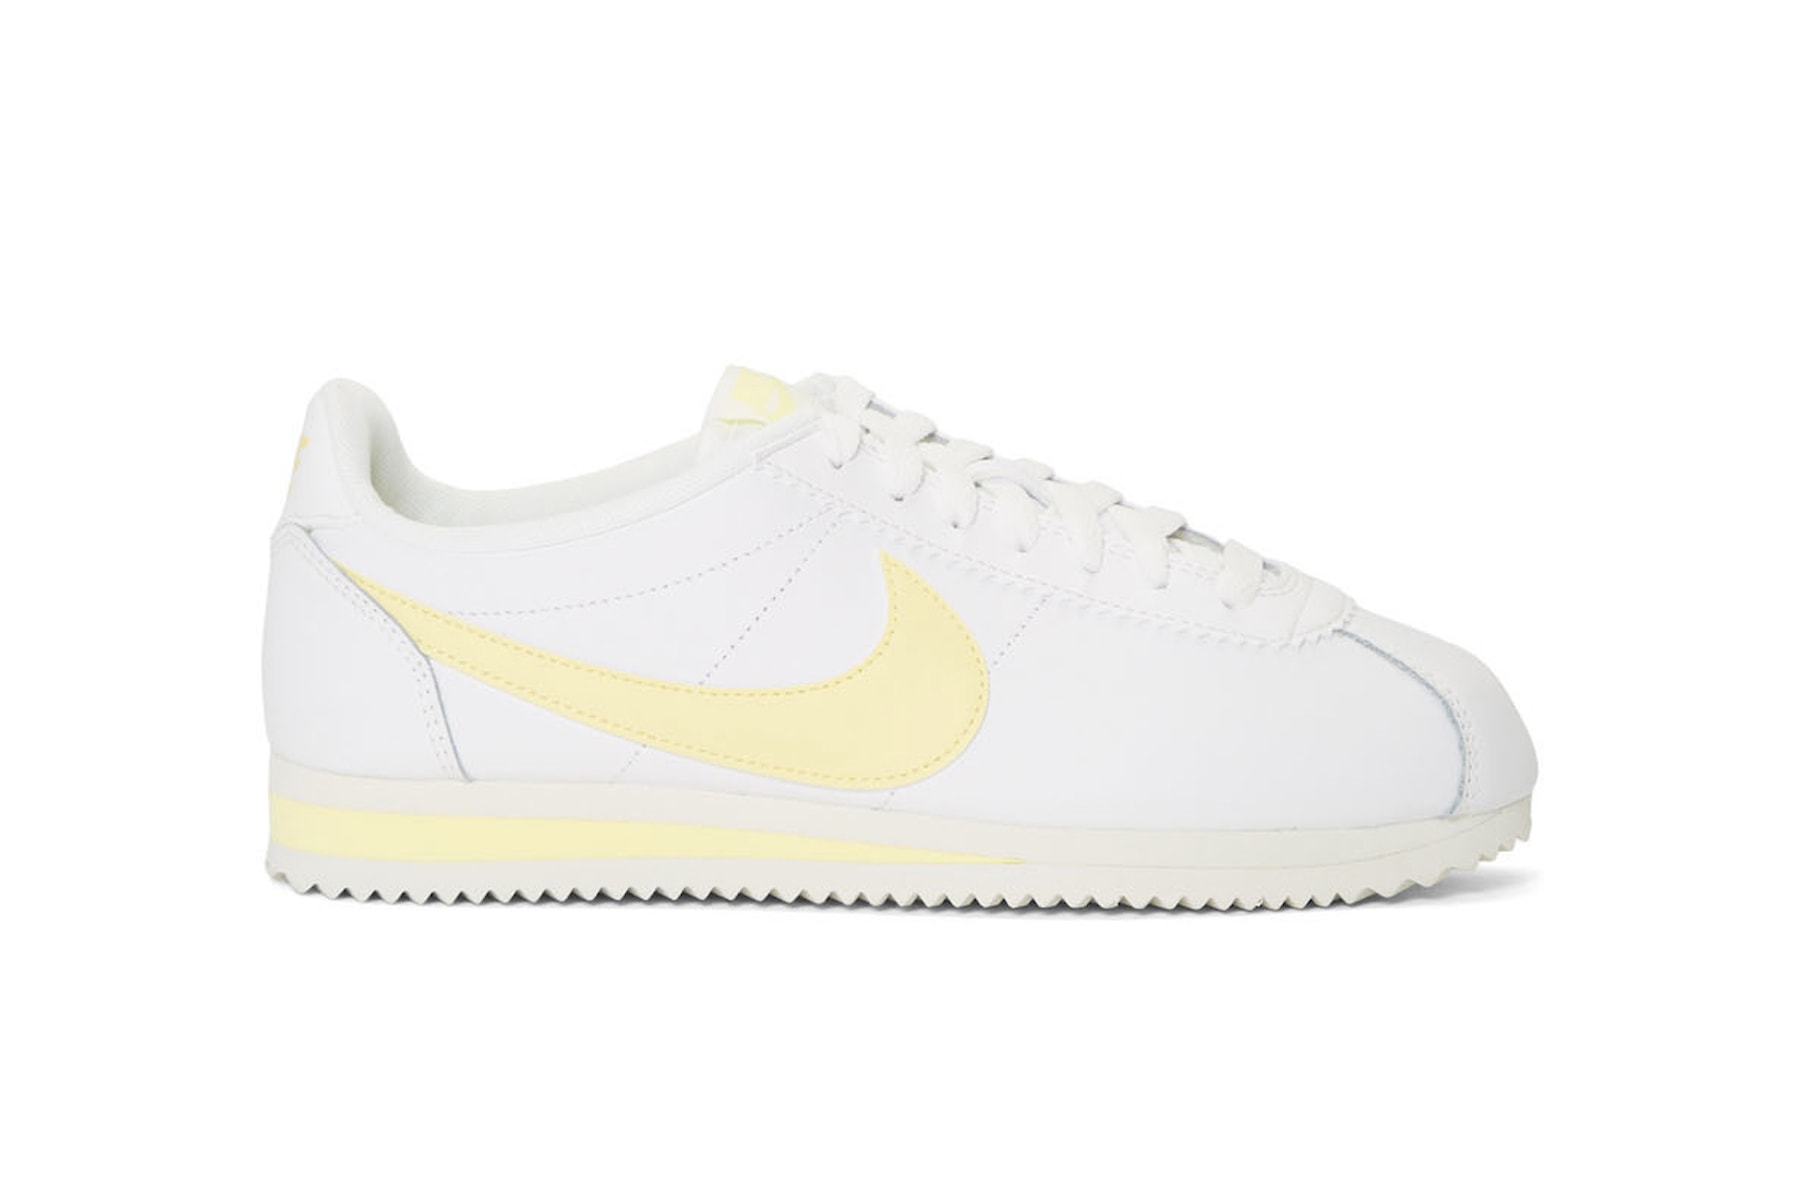 Nike Cortez in Pastel Yellow White Retro Sneaker Shoe Footwear Trainer Release Summer Fall Hue Colorful VIbrant Streetwear Staple